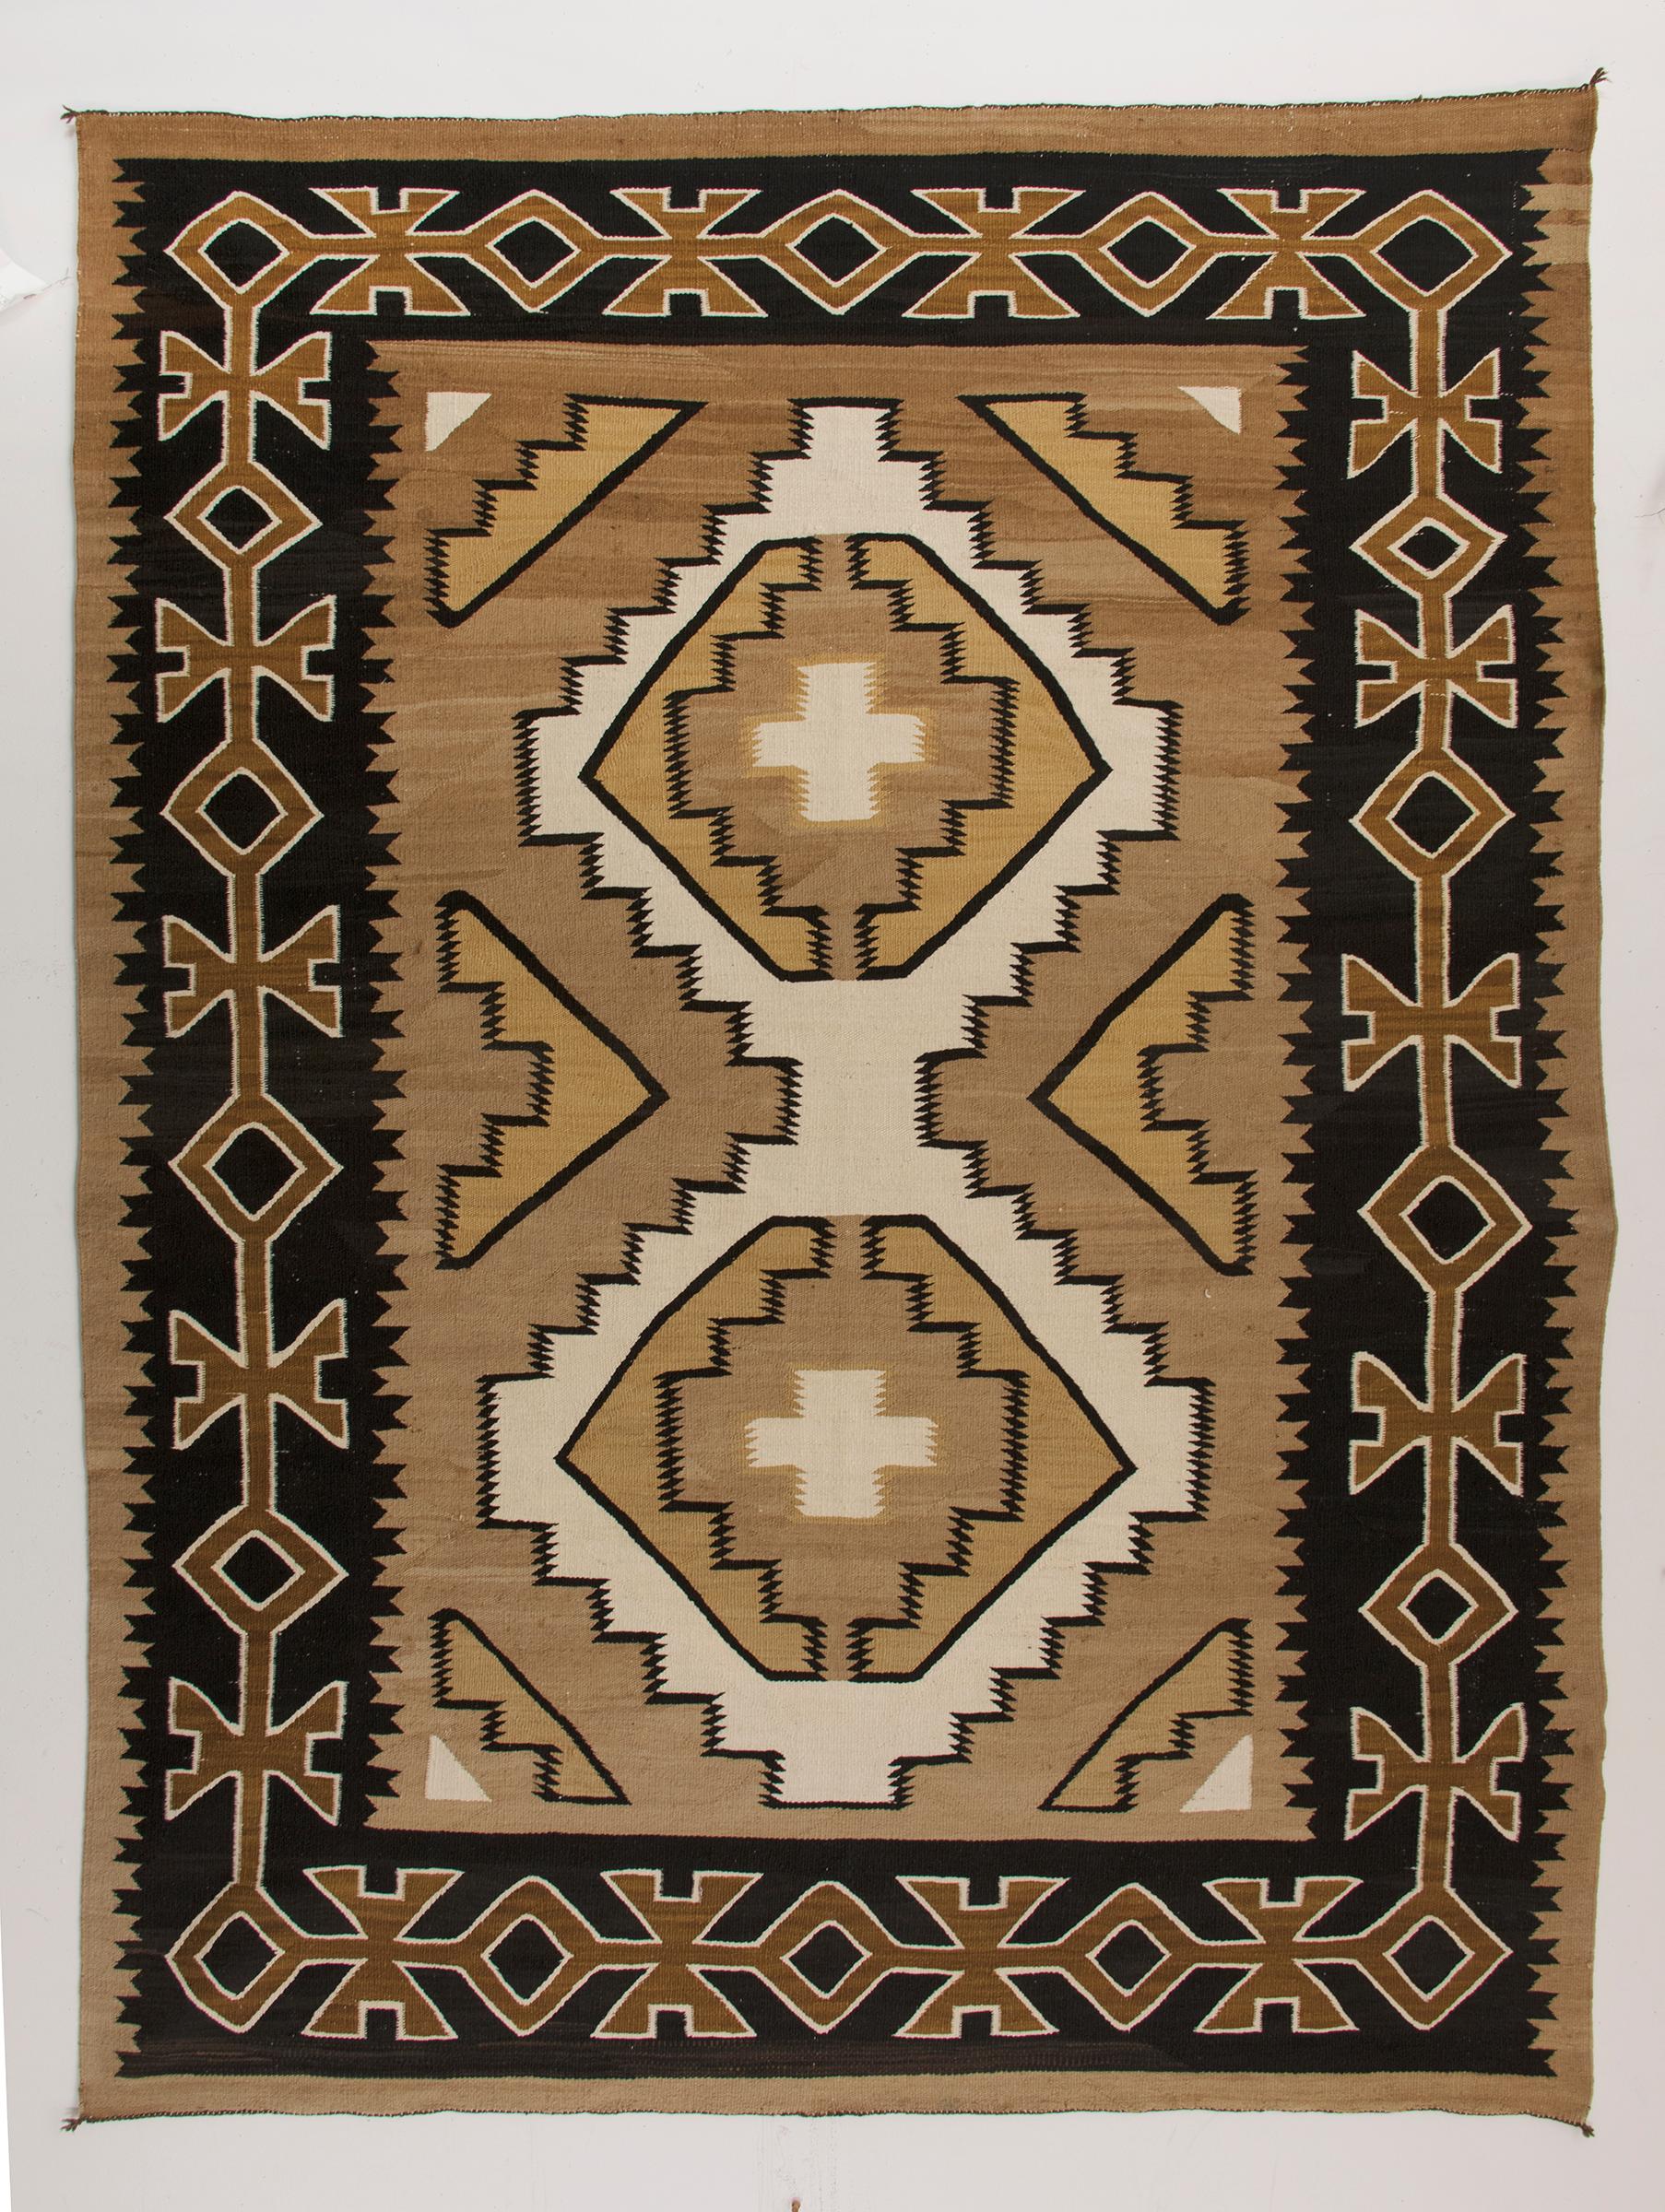 Hand-Woven Vintage Navajo Rug, Crystal Trading Post, circa 1930s-1950s, Brown, Camel, Ivory